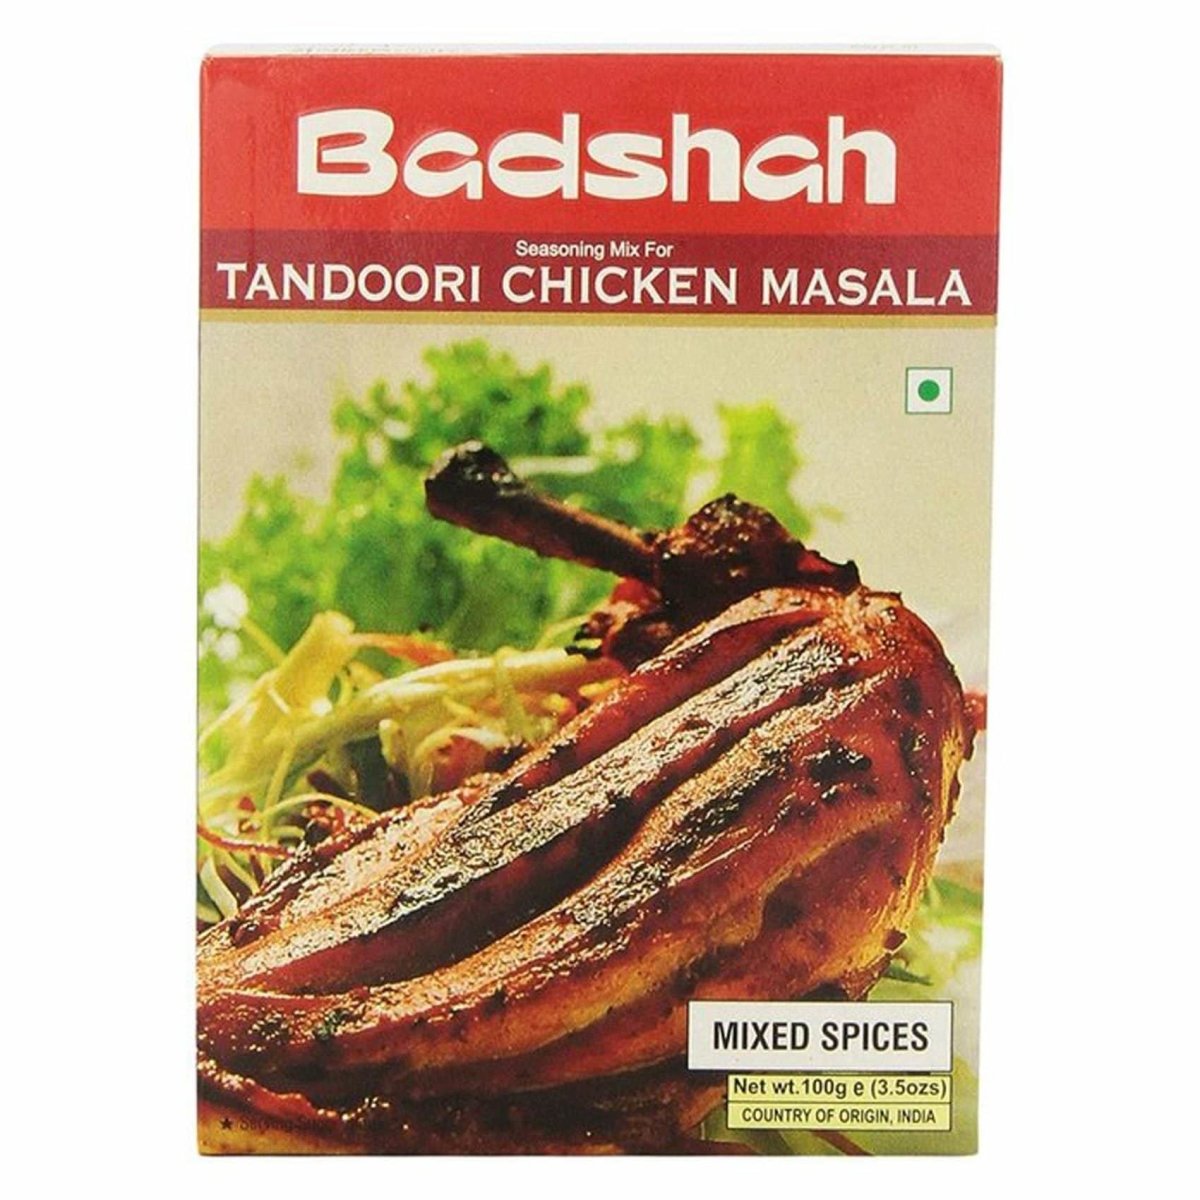 Badshah Tandoori Chicken Masala - Tulsidas